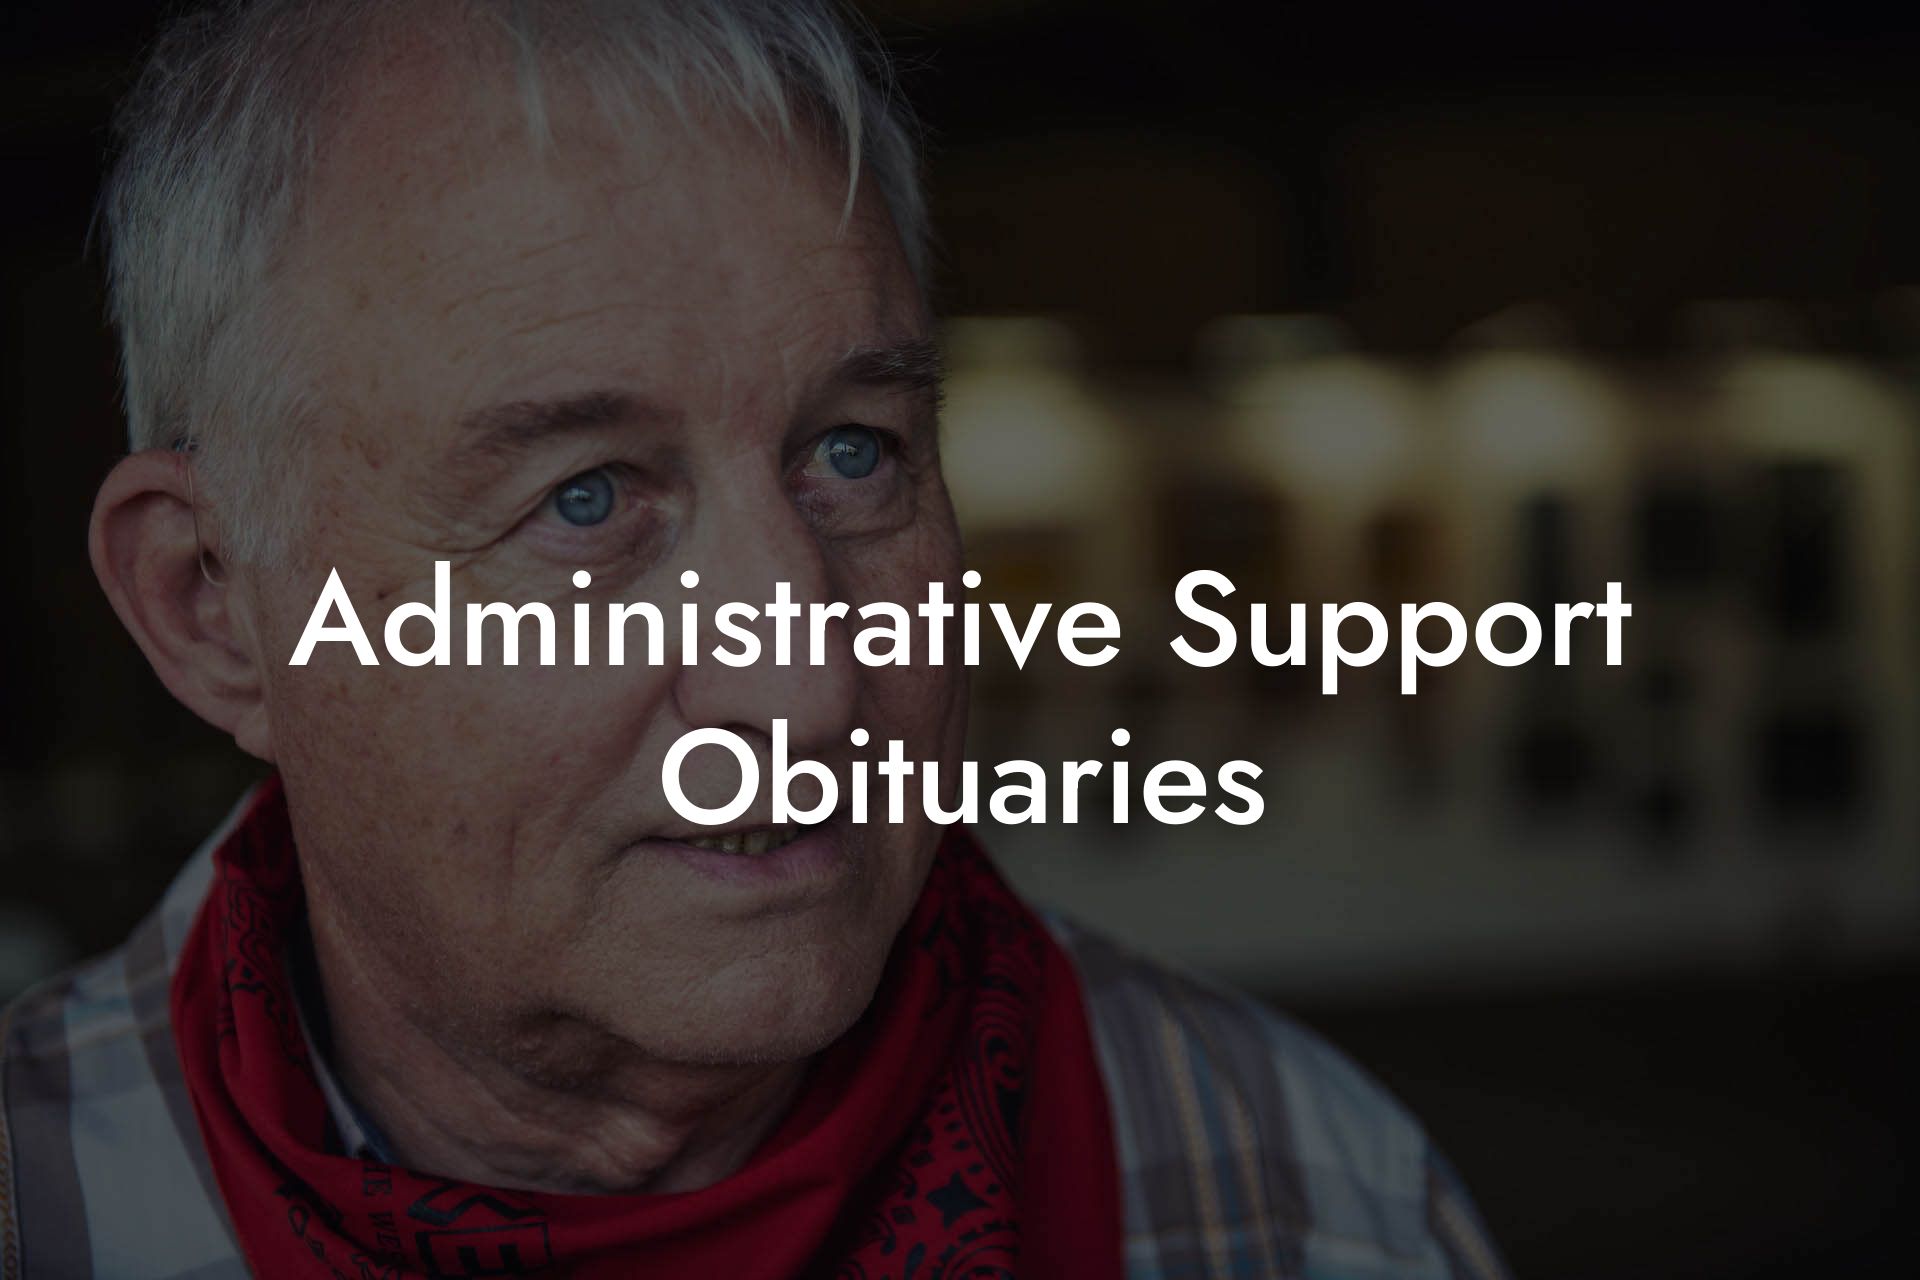 Administrative Support Obituaries